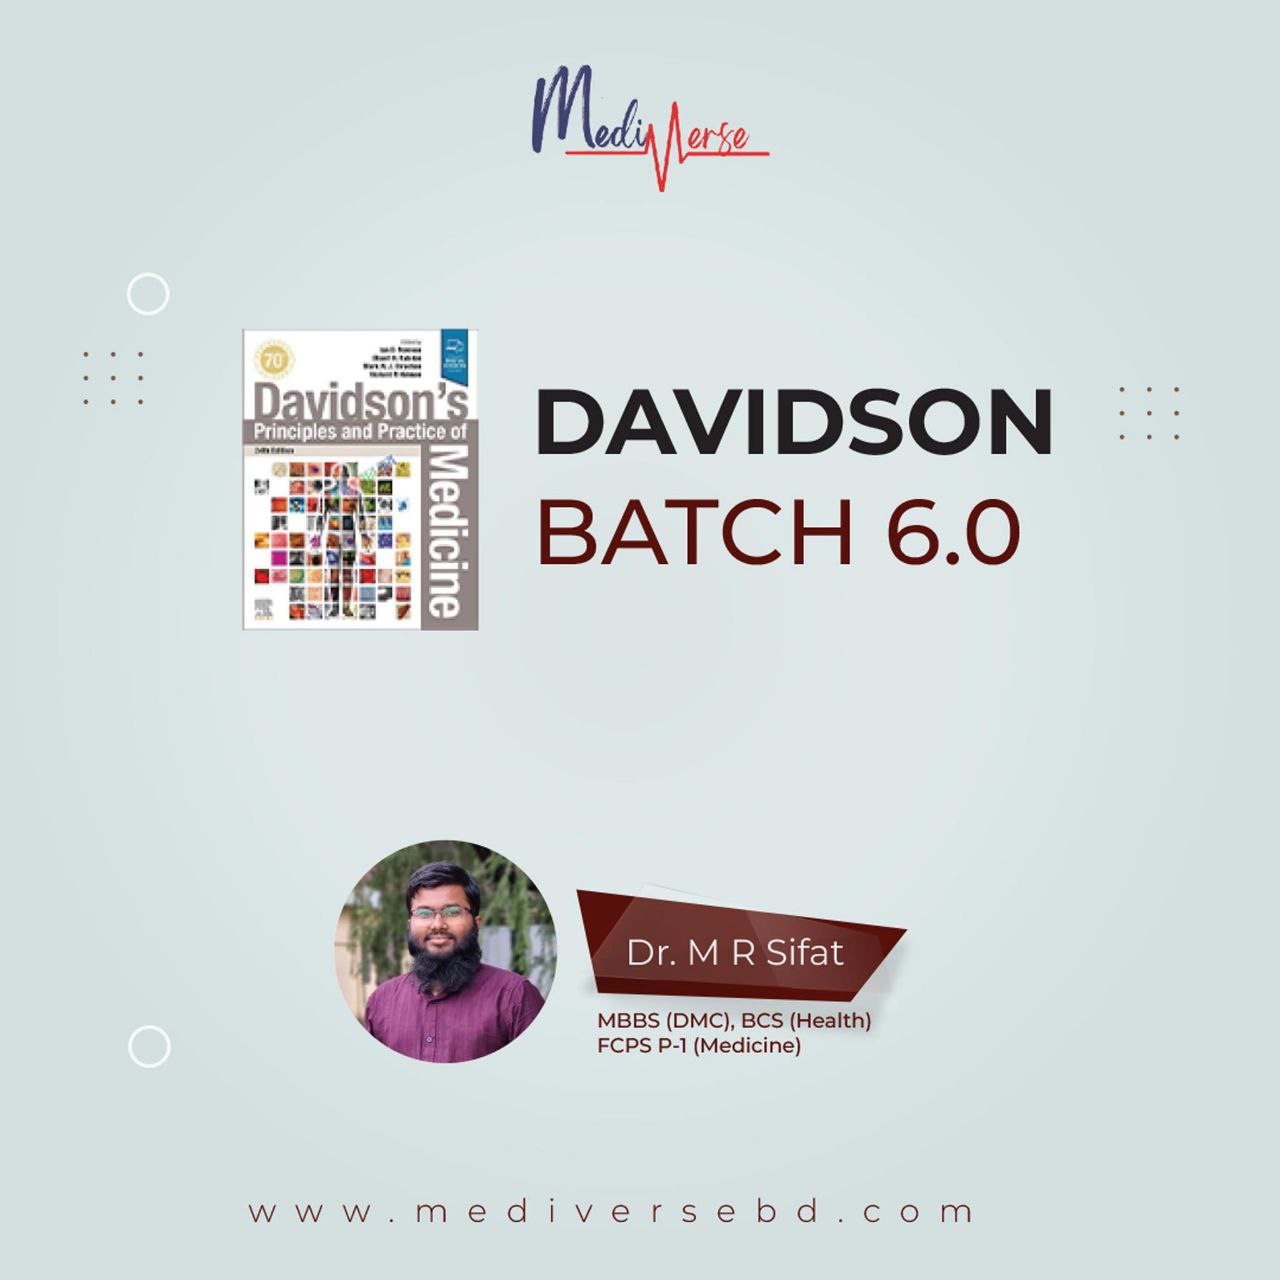 Davidson batch 6.0